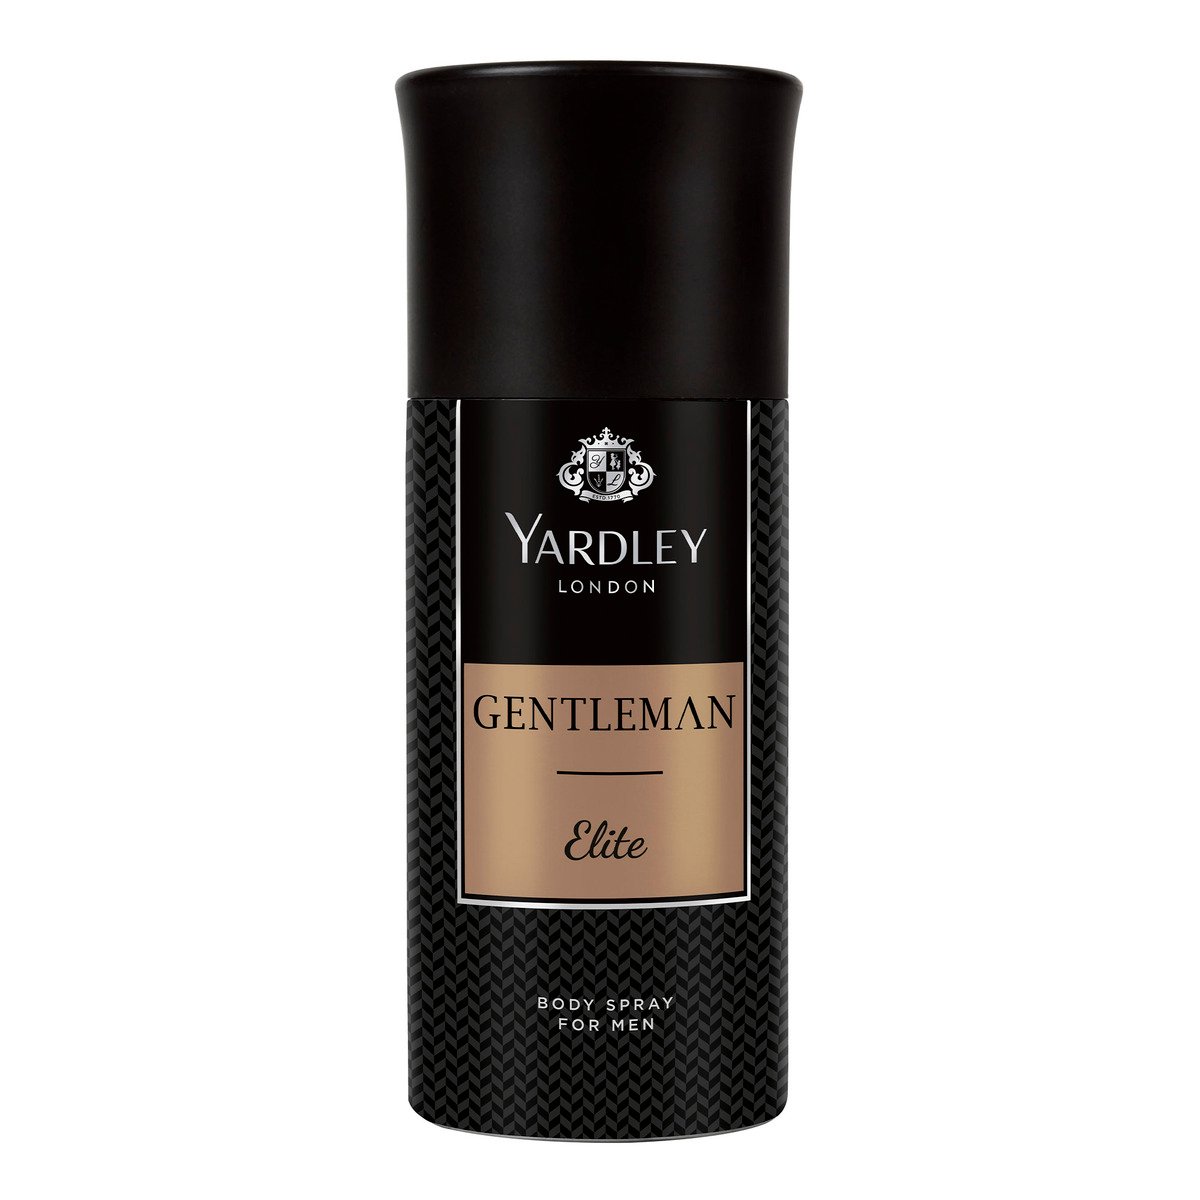 Yardley Body Spray Gentleman Elite For Men 150 ml